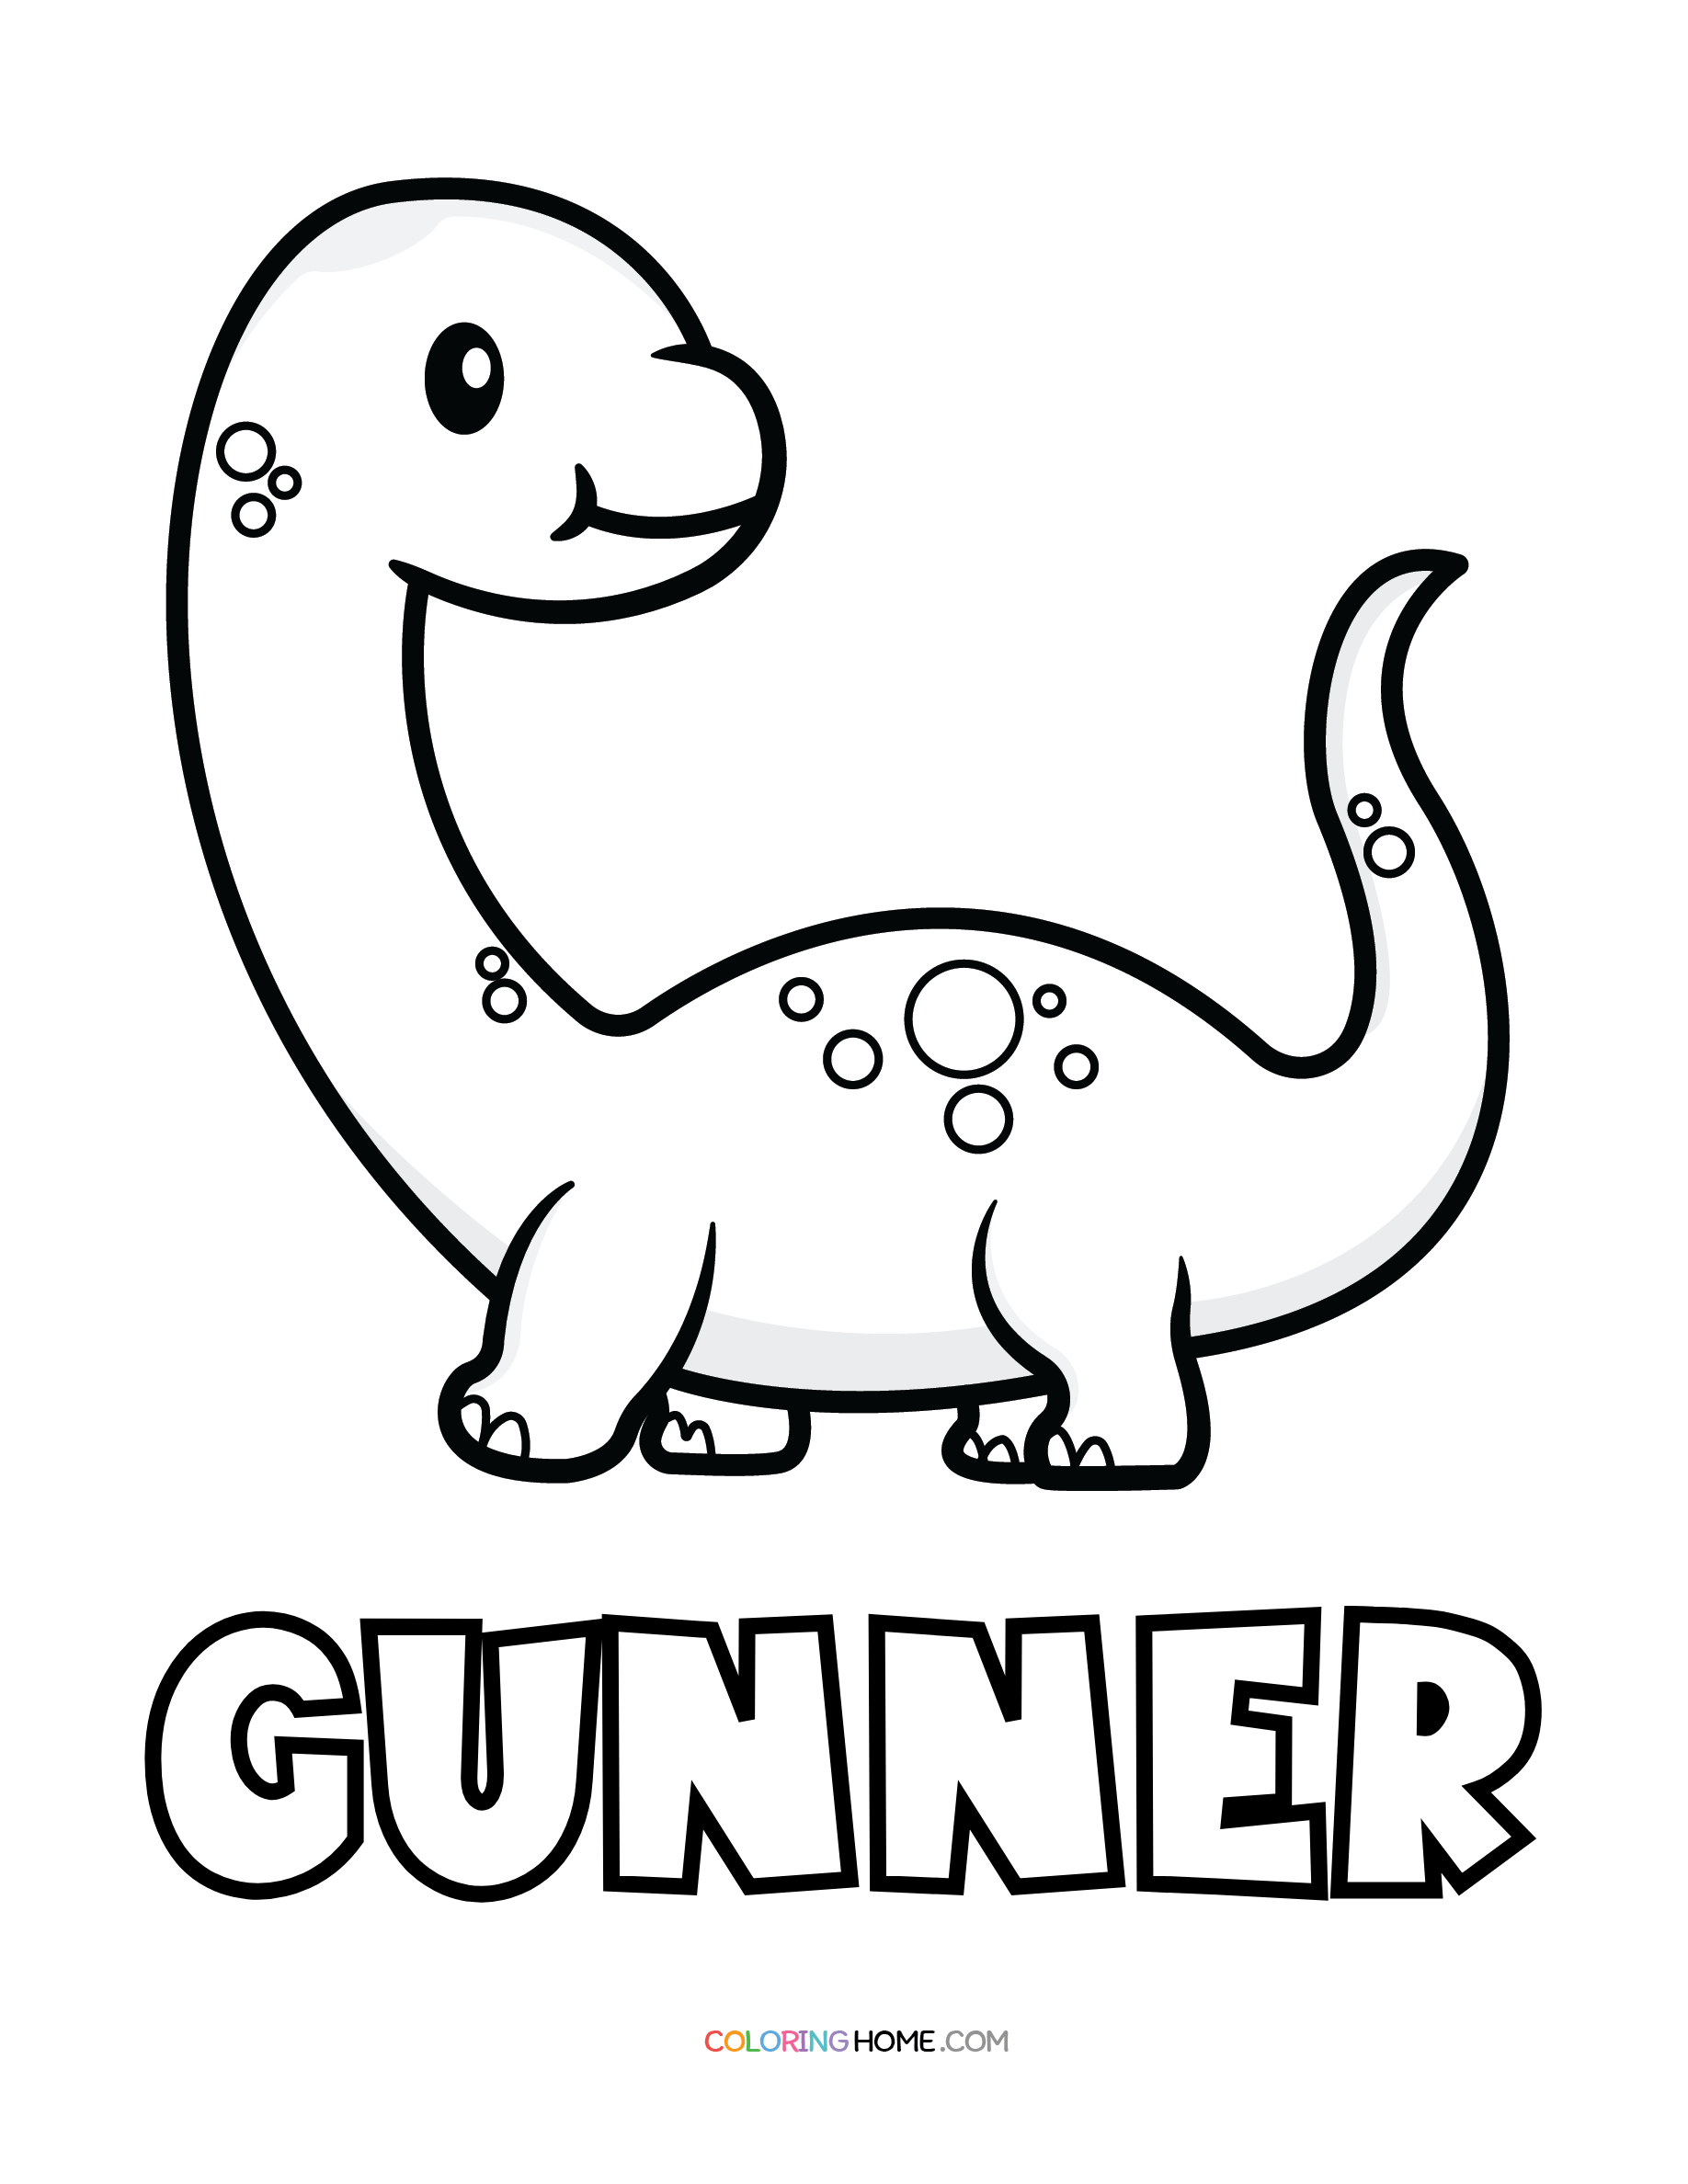 Gunner dinosaur coloring page